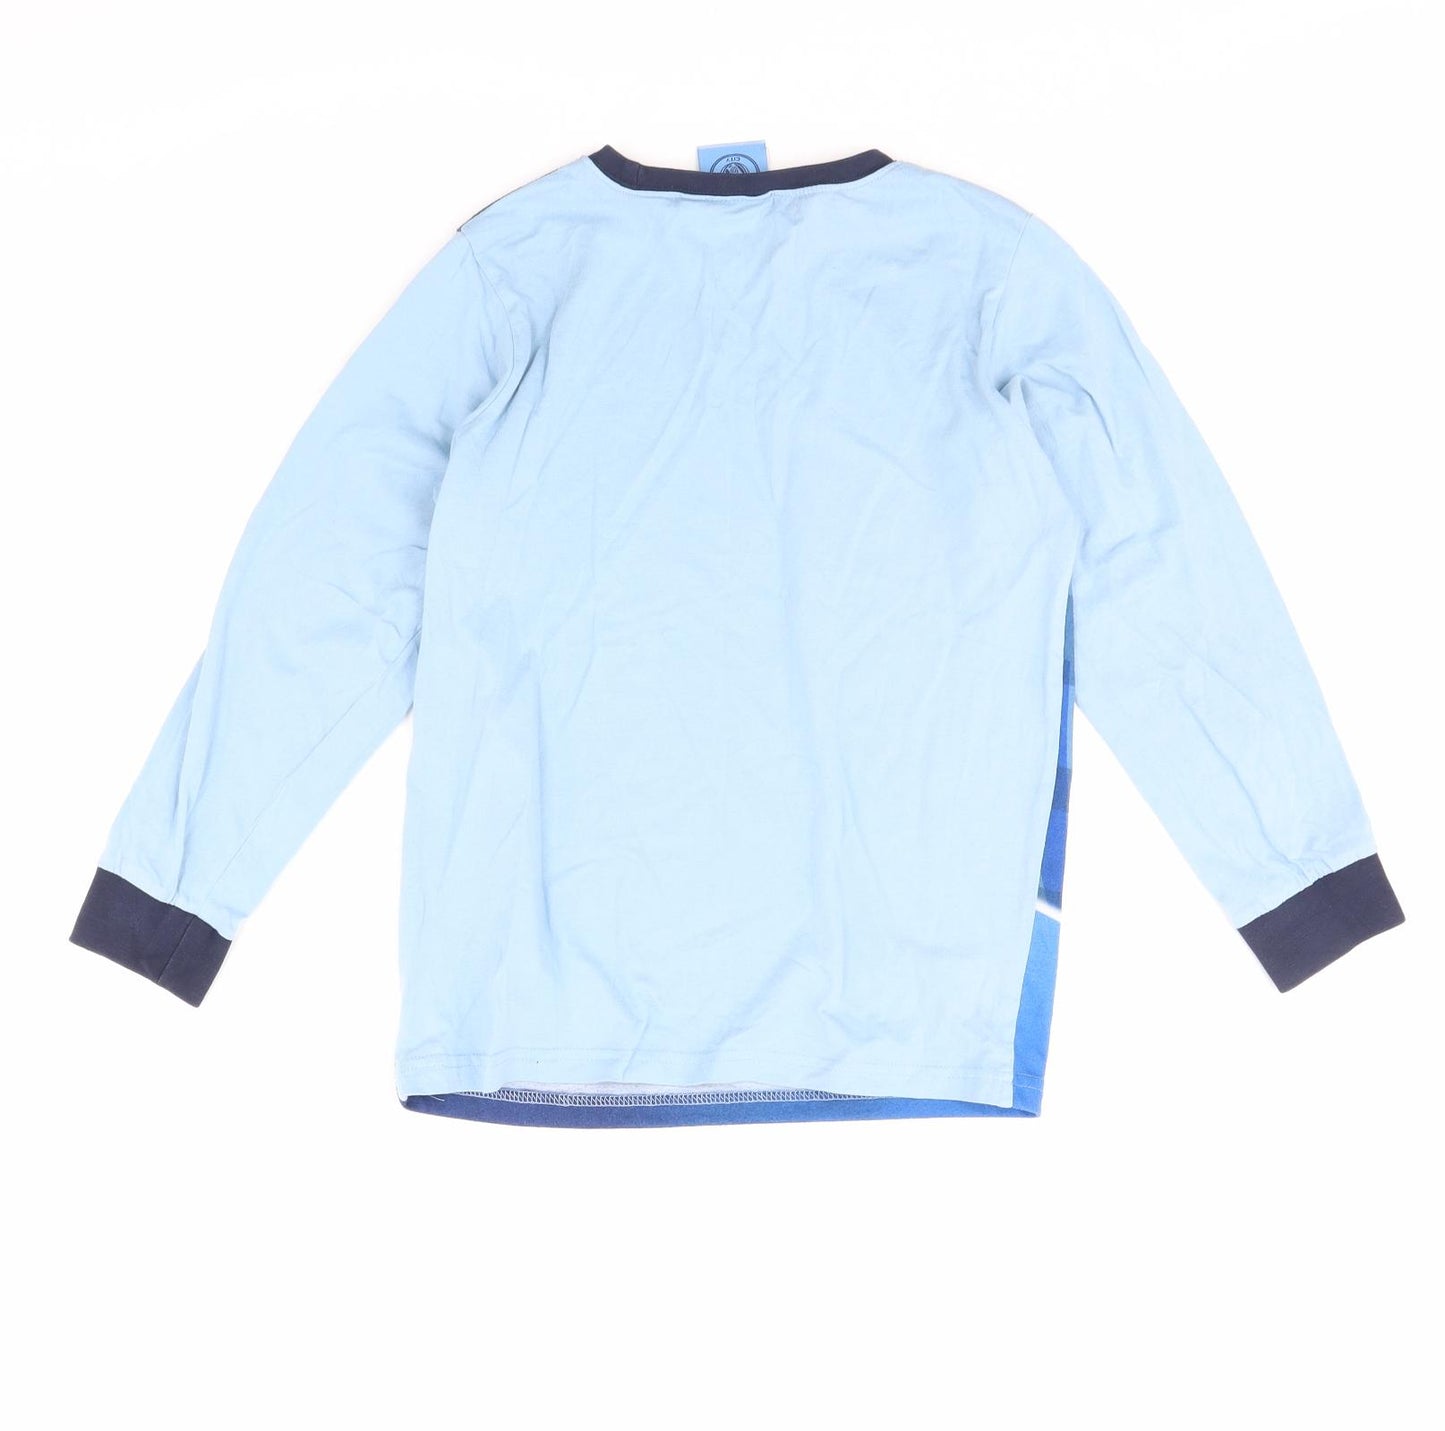 Manchester City FC Boys Blue   Basic T-Shirt Size 9 Years  - Manchester City Football Club